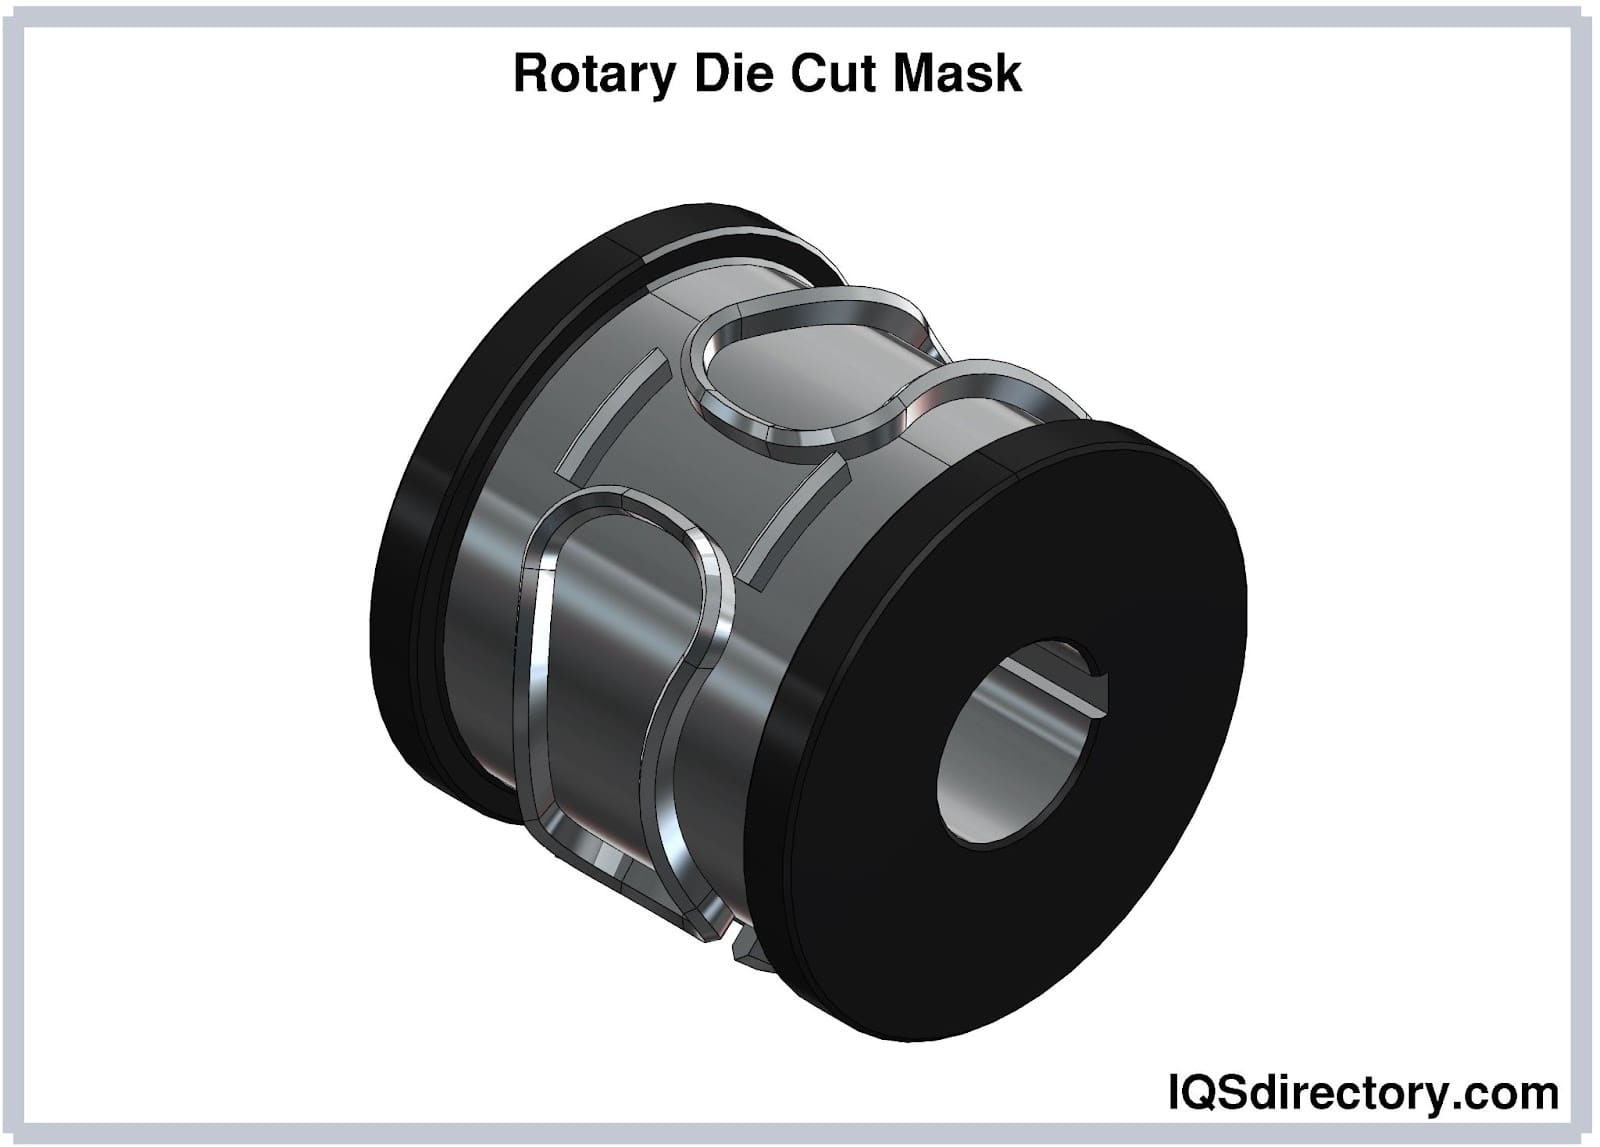 Rotary Die Cut Mask